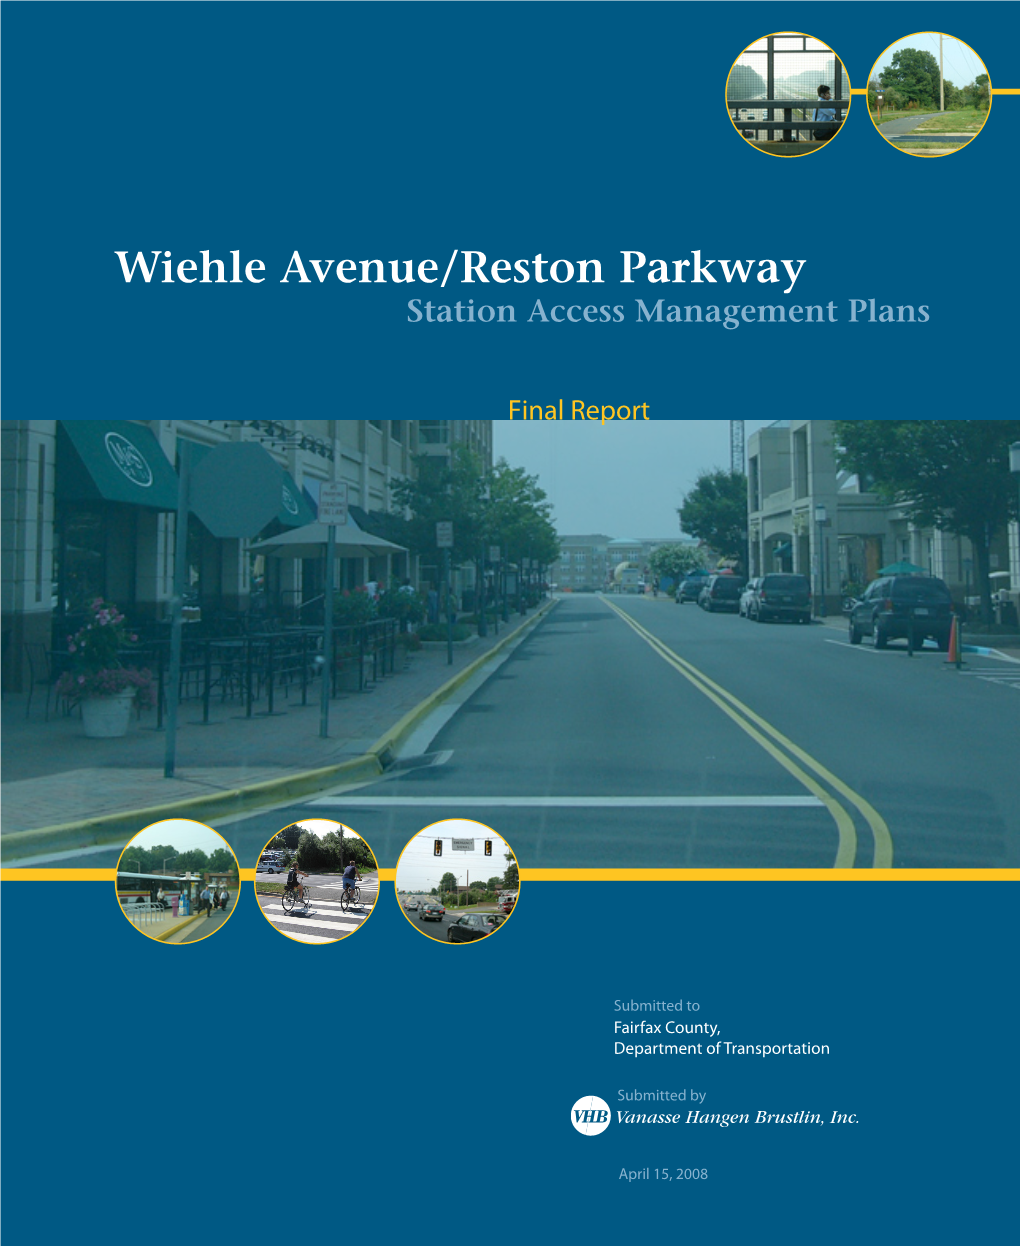 Wiehle Avenue/Reston Parkway Station Access Management Plans